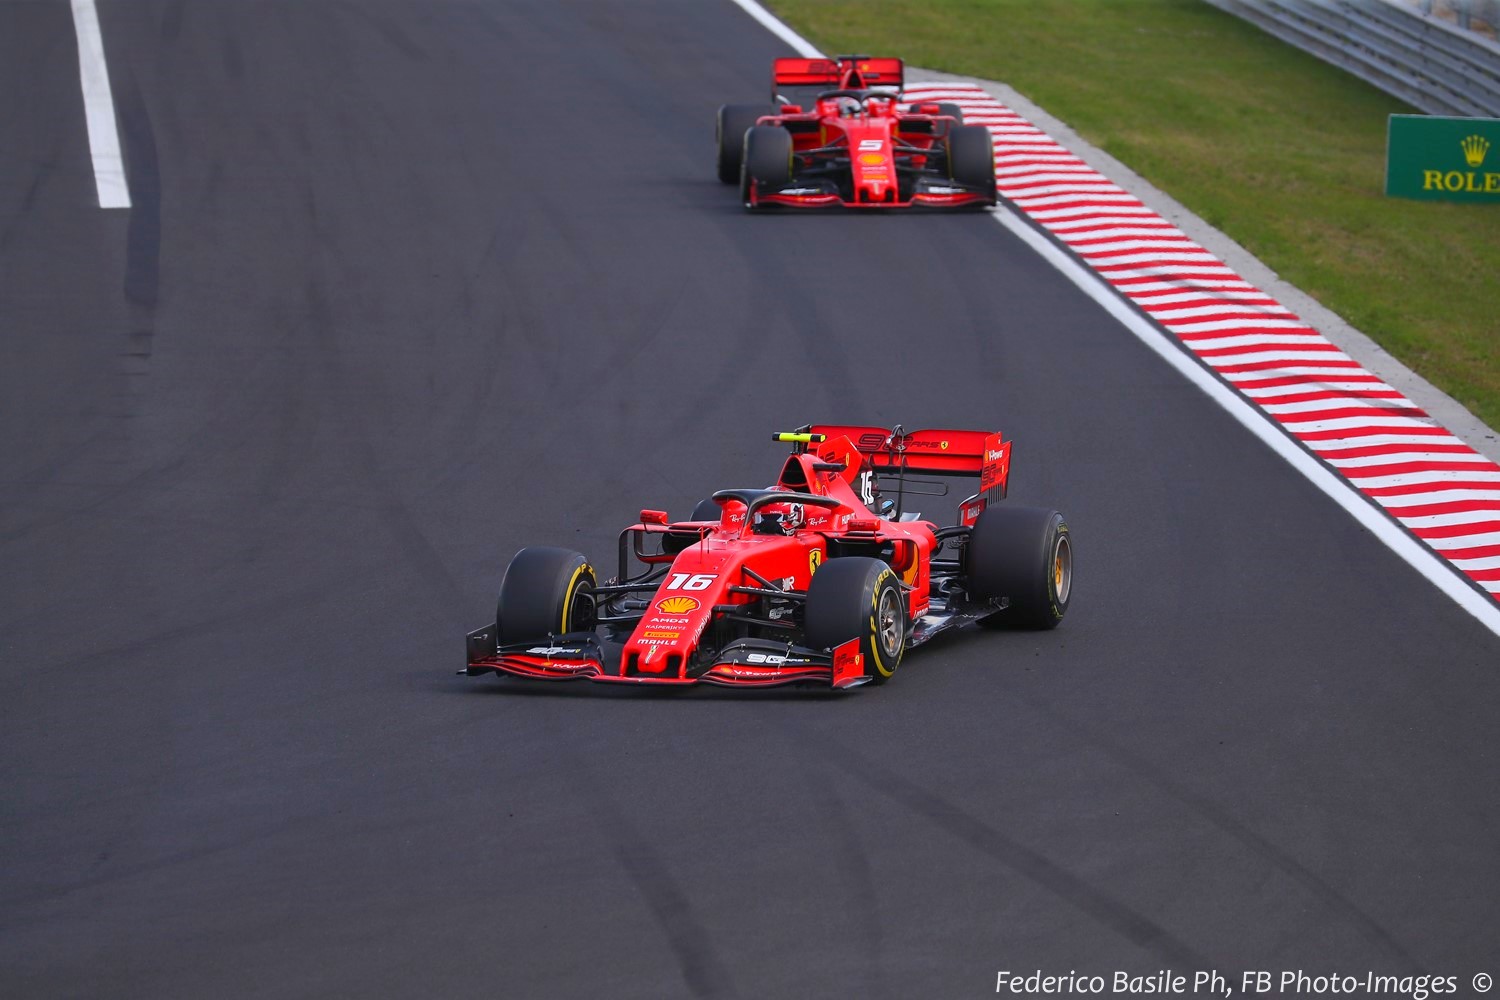 Vettel hunts down Leclerc and passes him